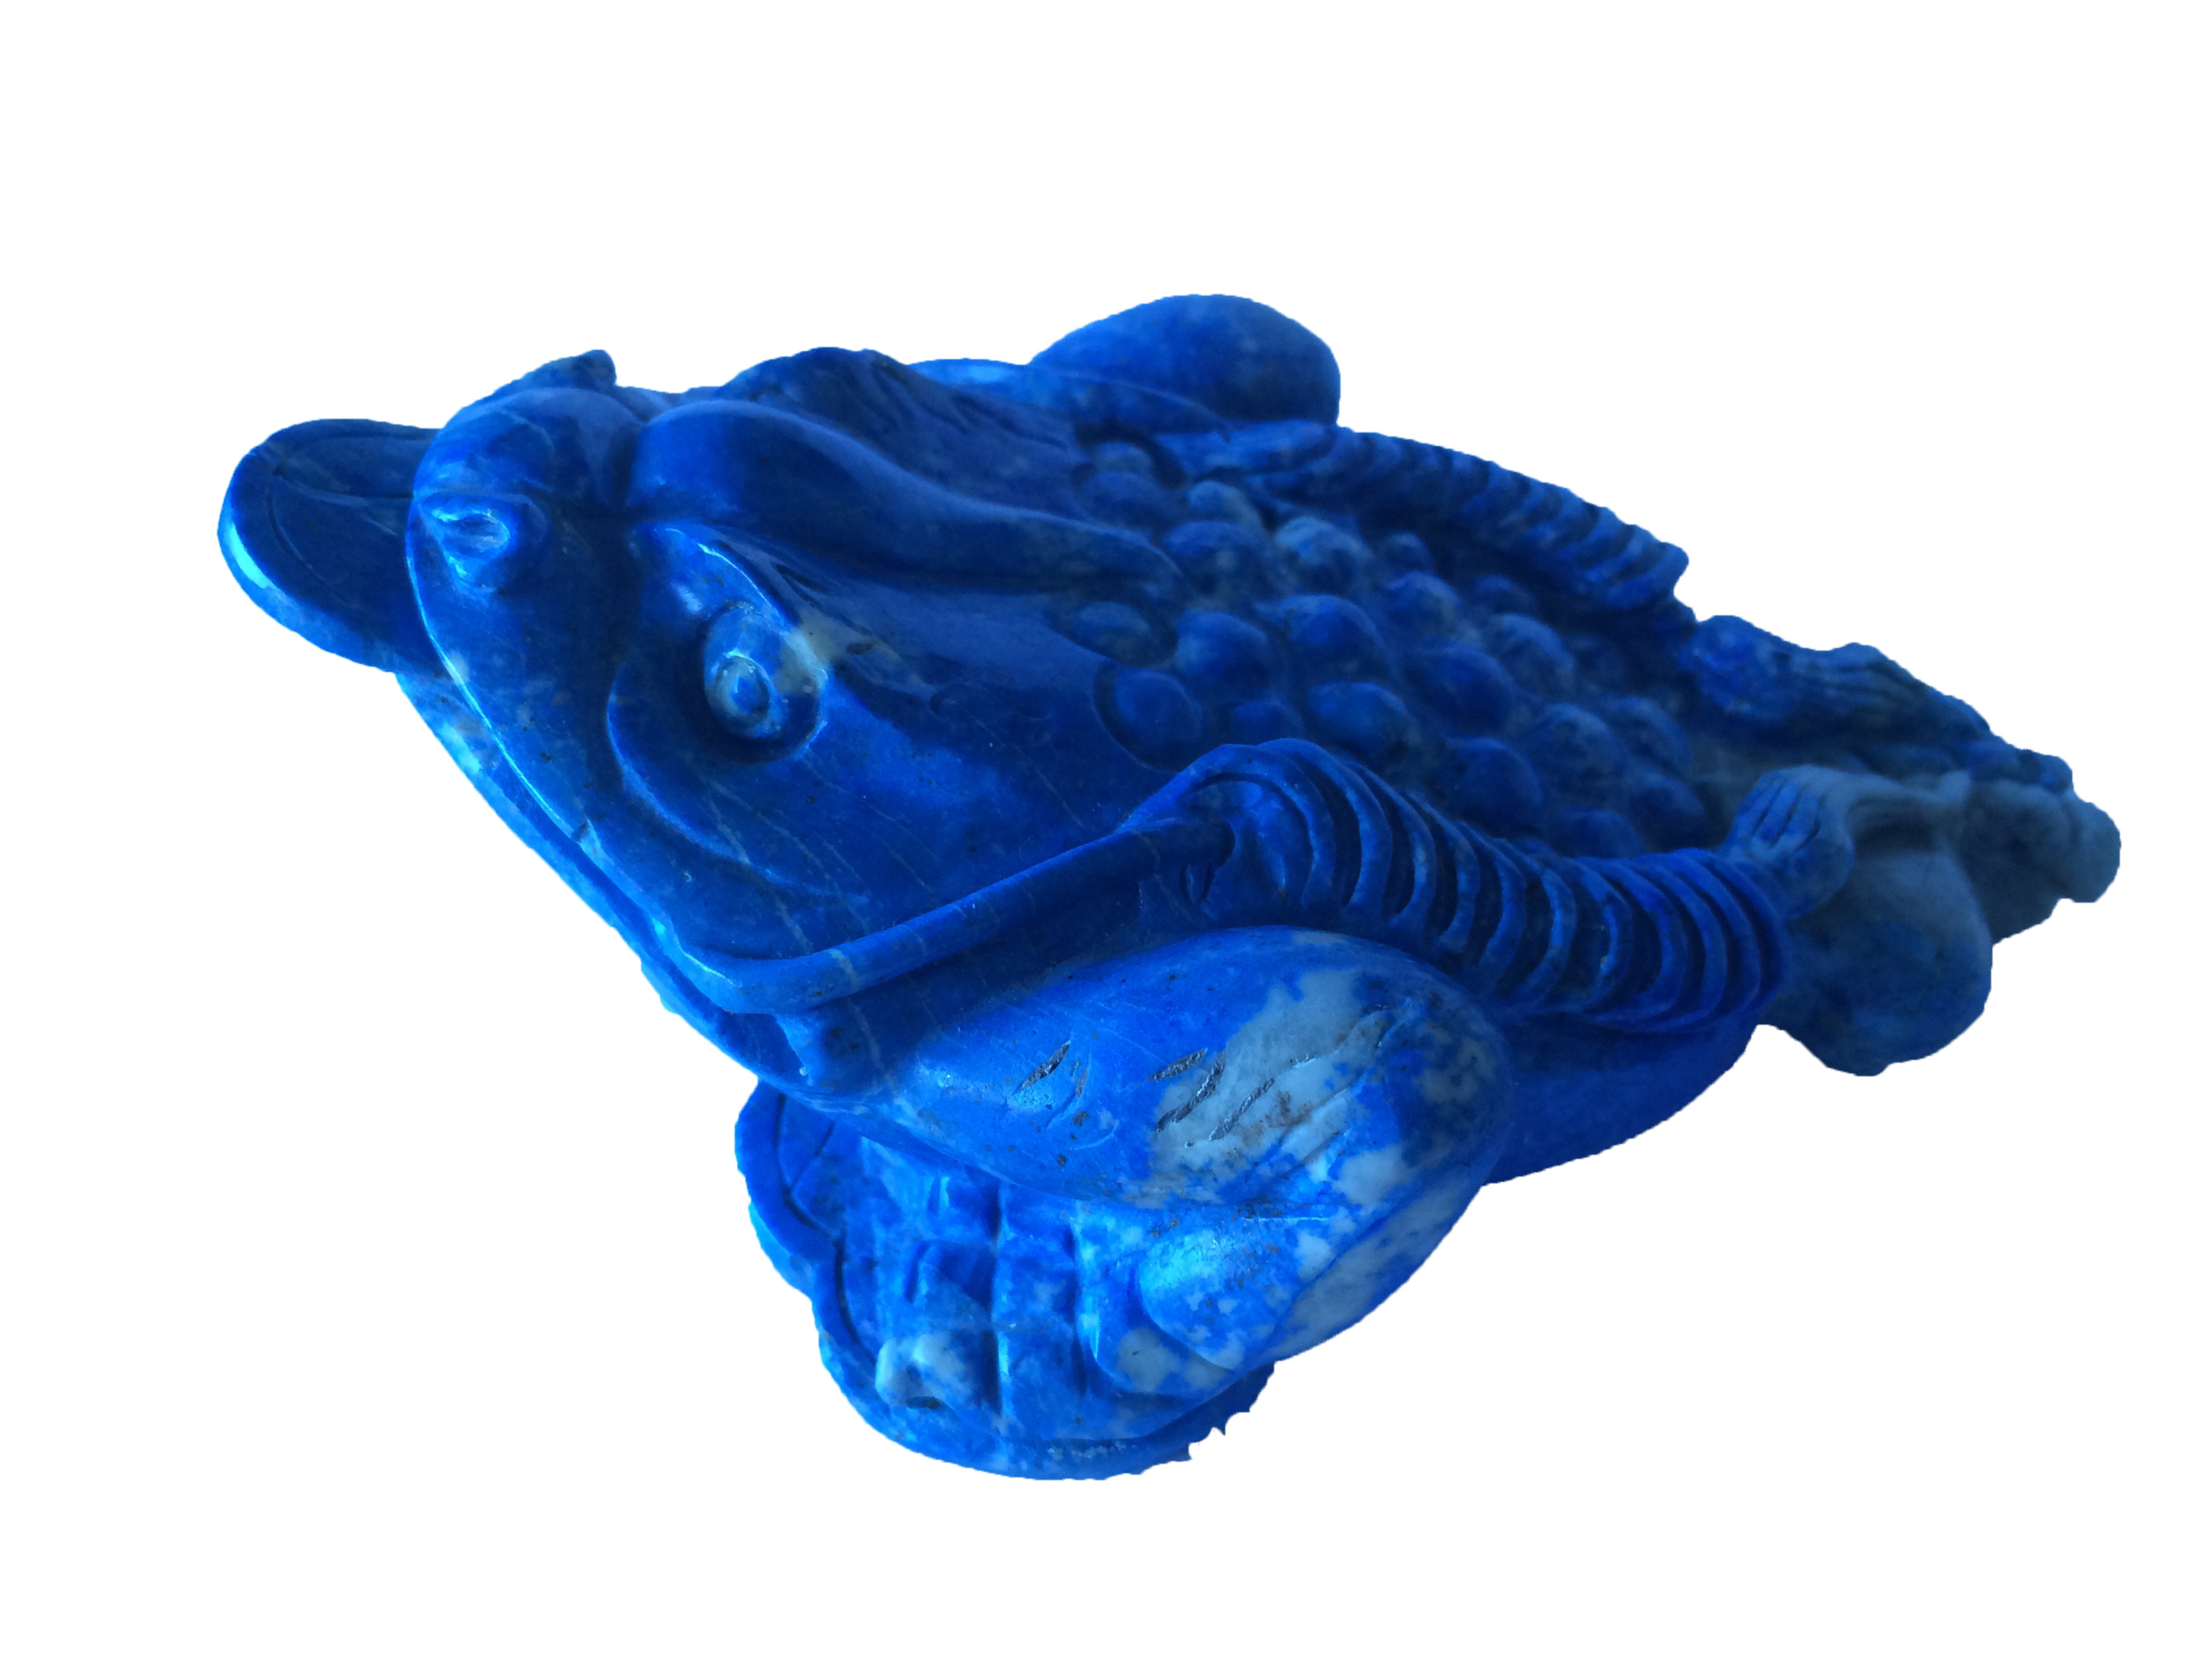 grenouille-de-prosperite-en-lapis-lazuli-pei-441-mi11092009-020-1469879930